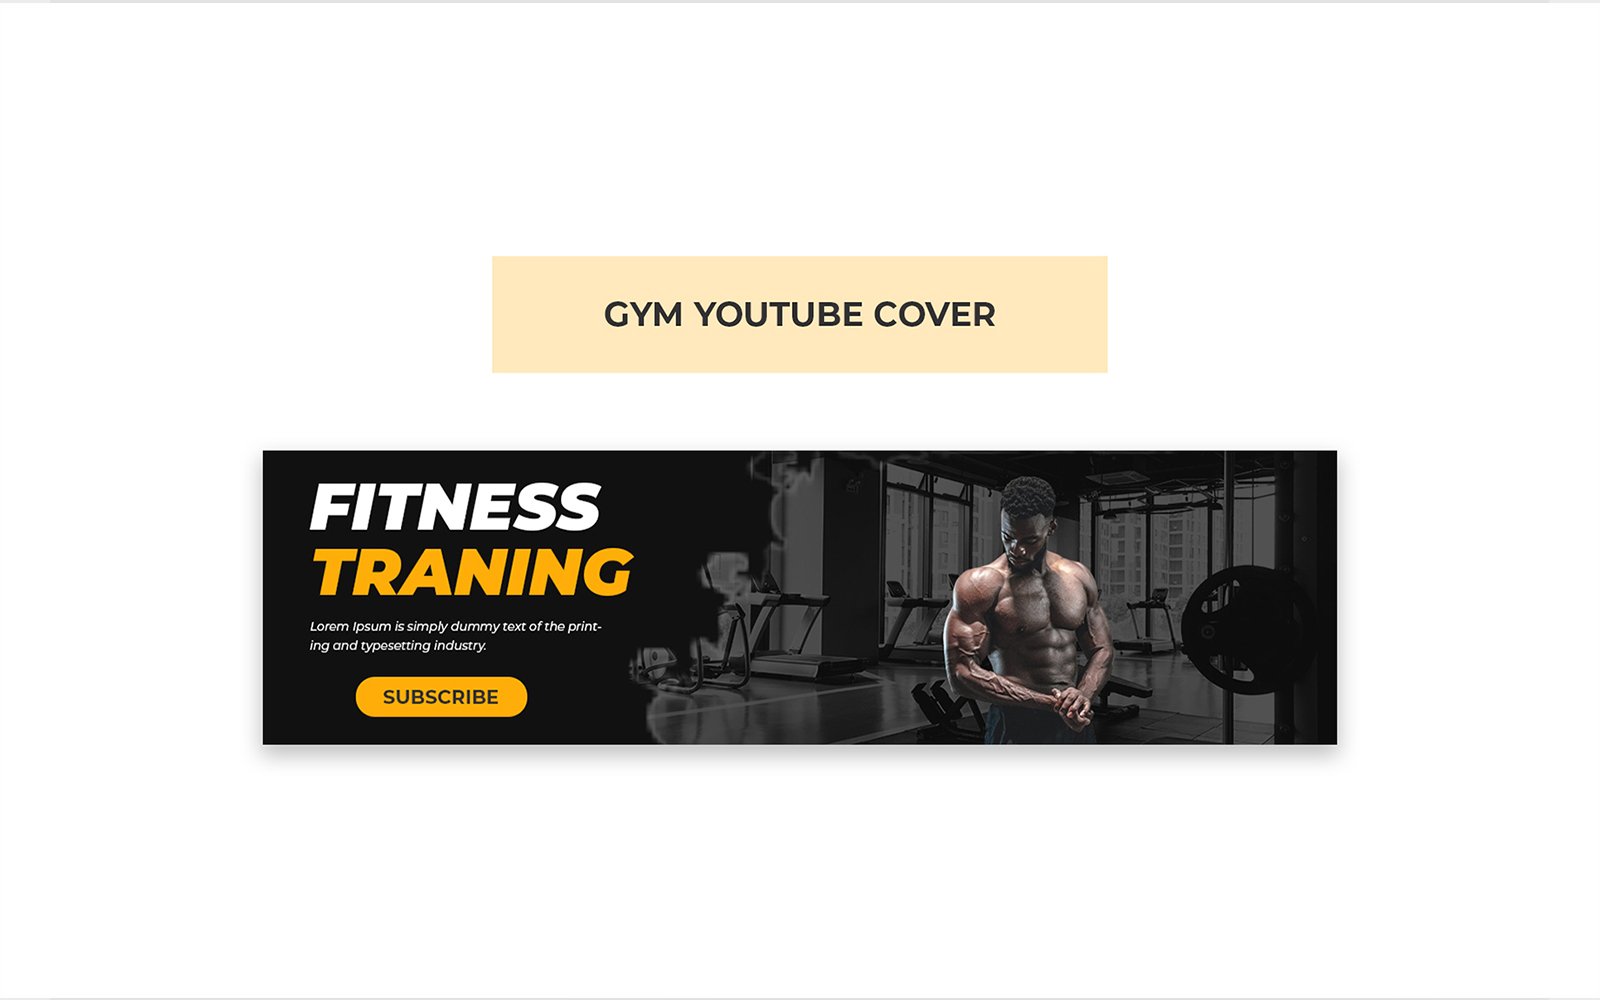 Gym YouTube Cover Header Design